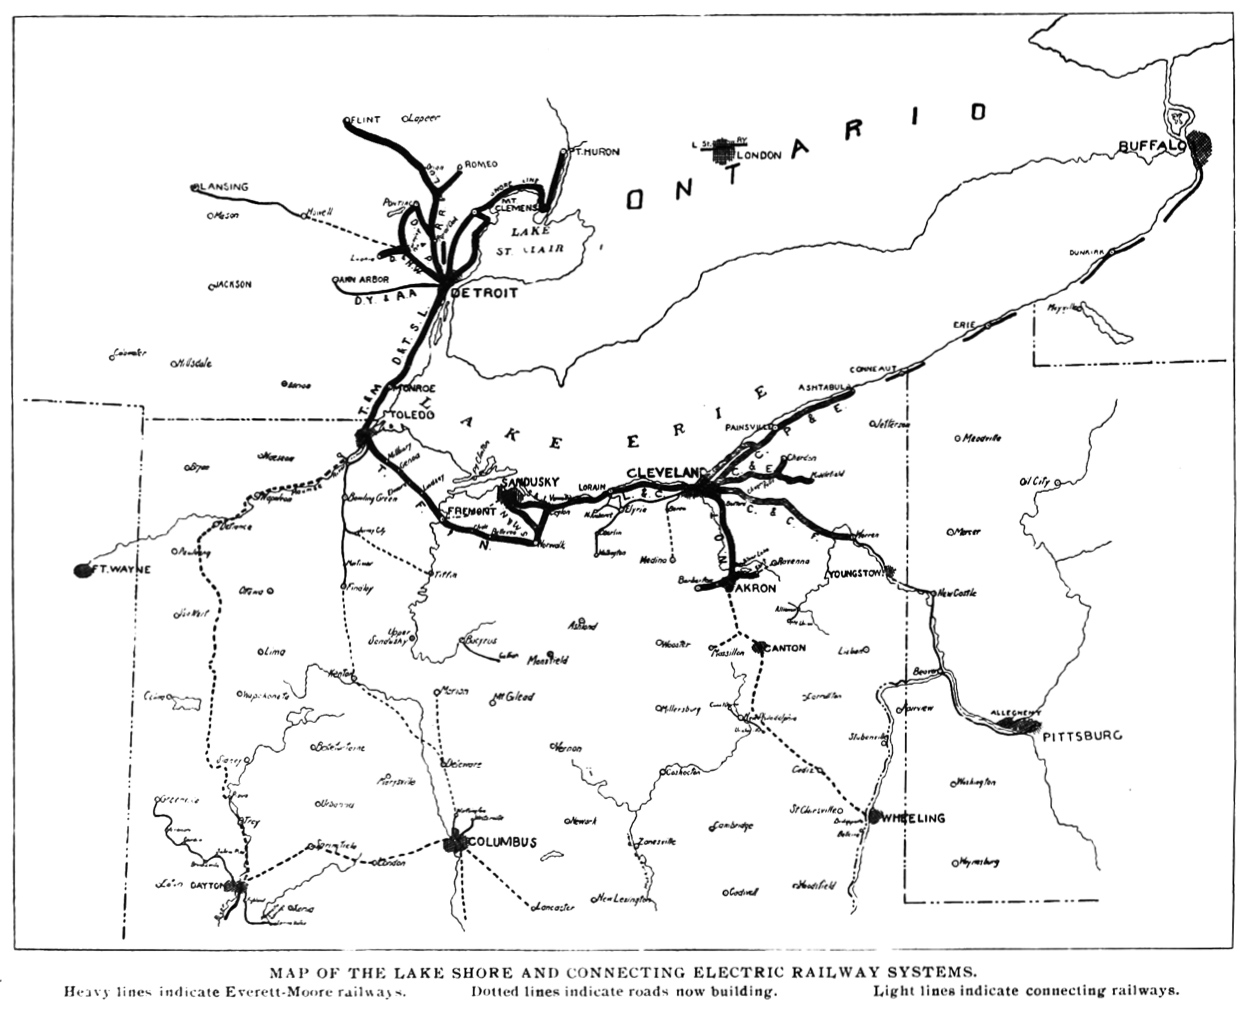 Detroit — Maps; Toledo — Maps; Eastern Ohio — Maps; Cleveland — Maps and Plans; Lake Shore Electric — Maps and Plans; Akron — Maps and Plans; Cleveland & Southwestern — Maps and Plans; Painesville — Maps and Plans